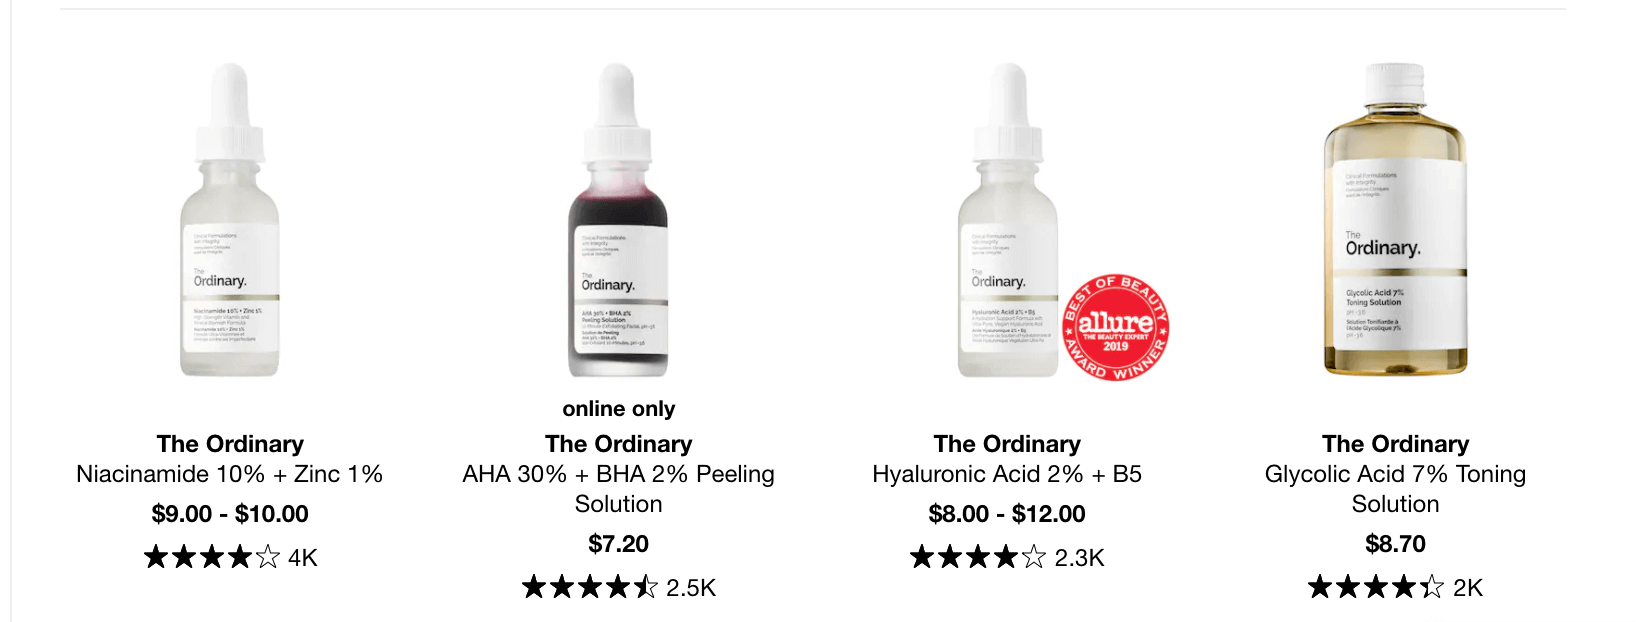 The Ordinary beauty products, Sephora.com